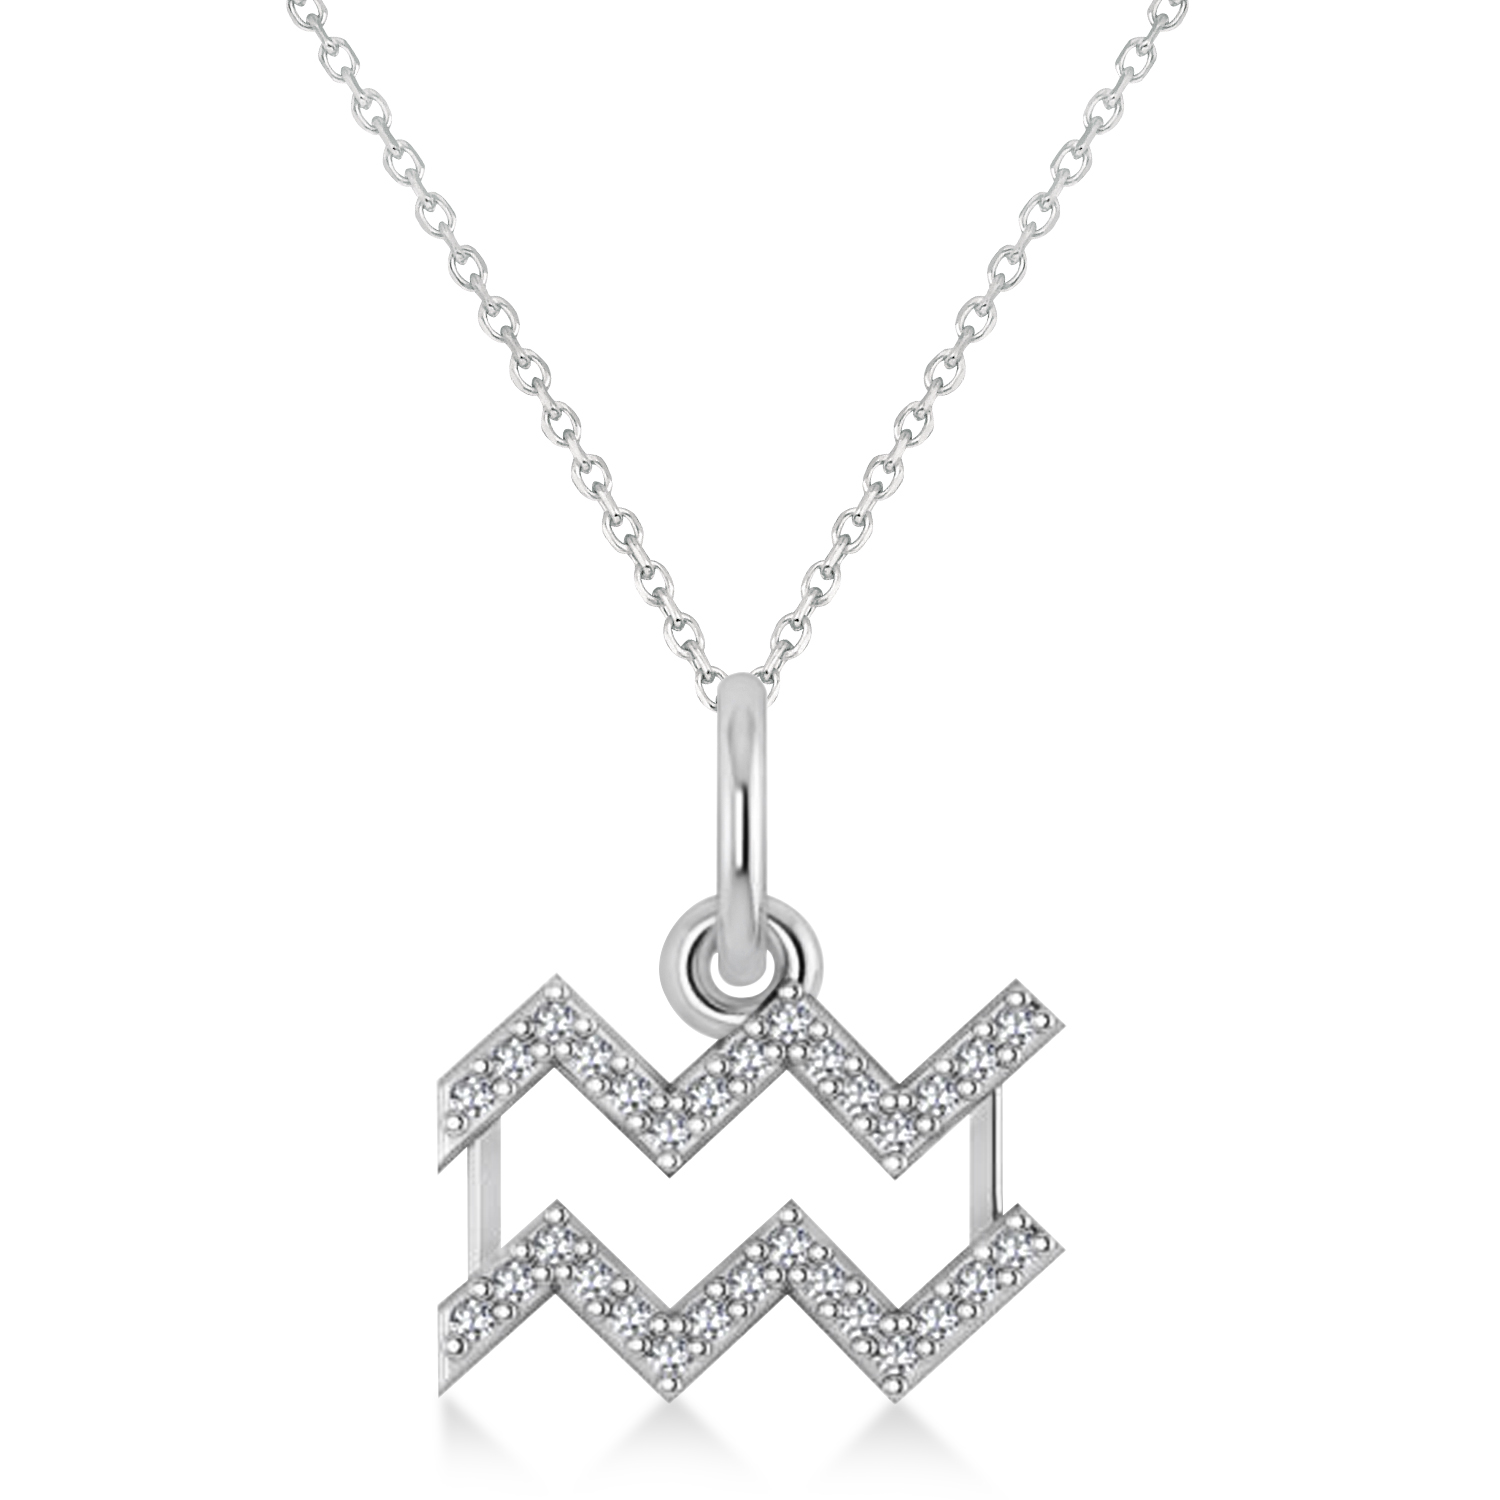 Aquarius Zodiac Diamond Pendant Necklace 14k White Gold (0.15ct) by Allurez.